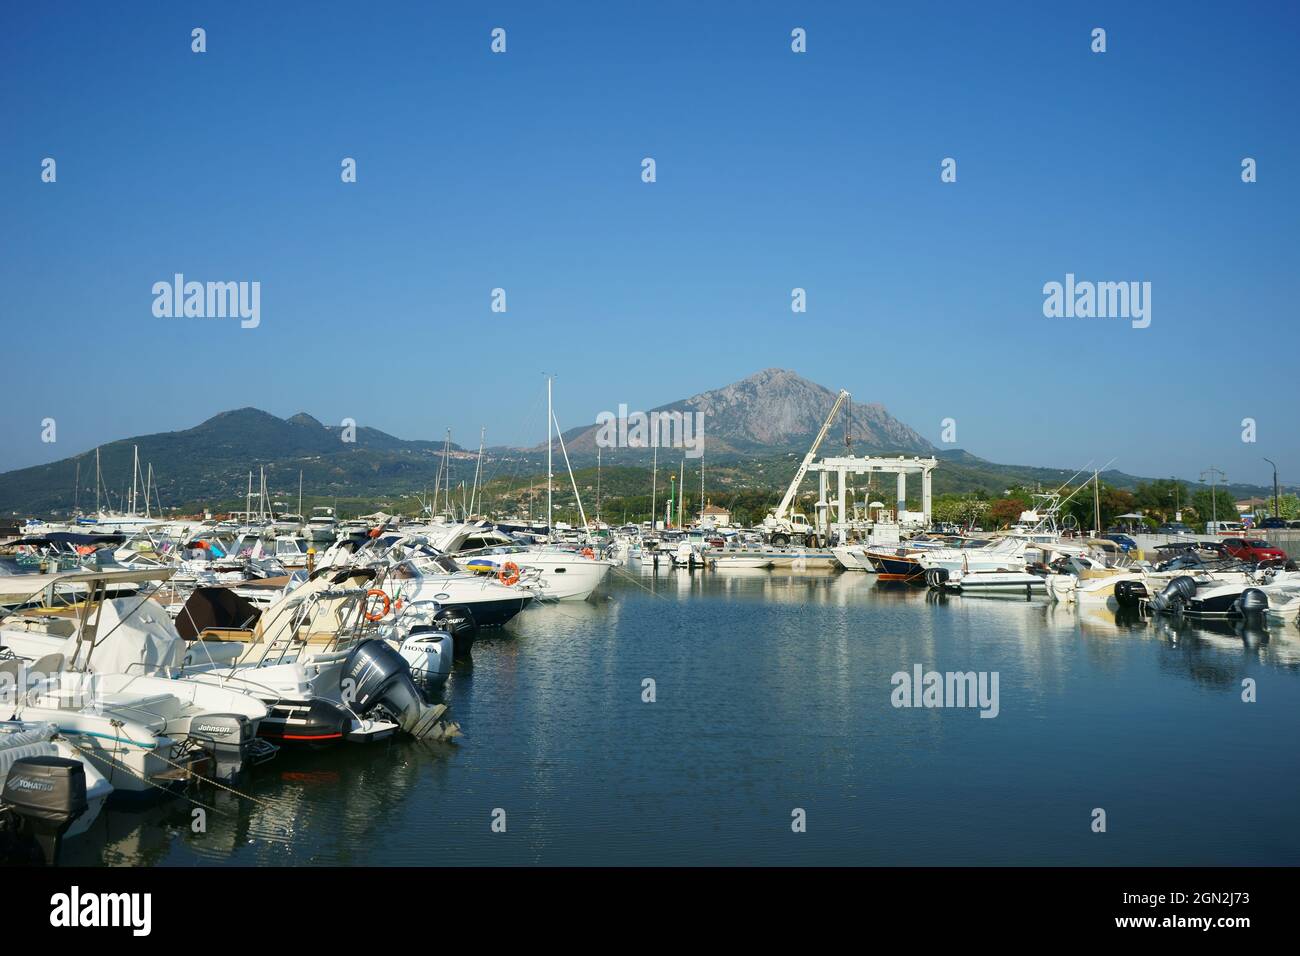 Village of Policastro, Cilento, Salerno, Italy - Port Stock Photo